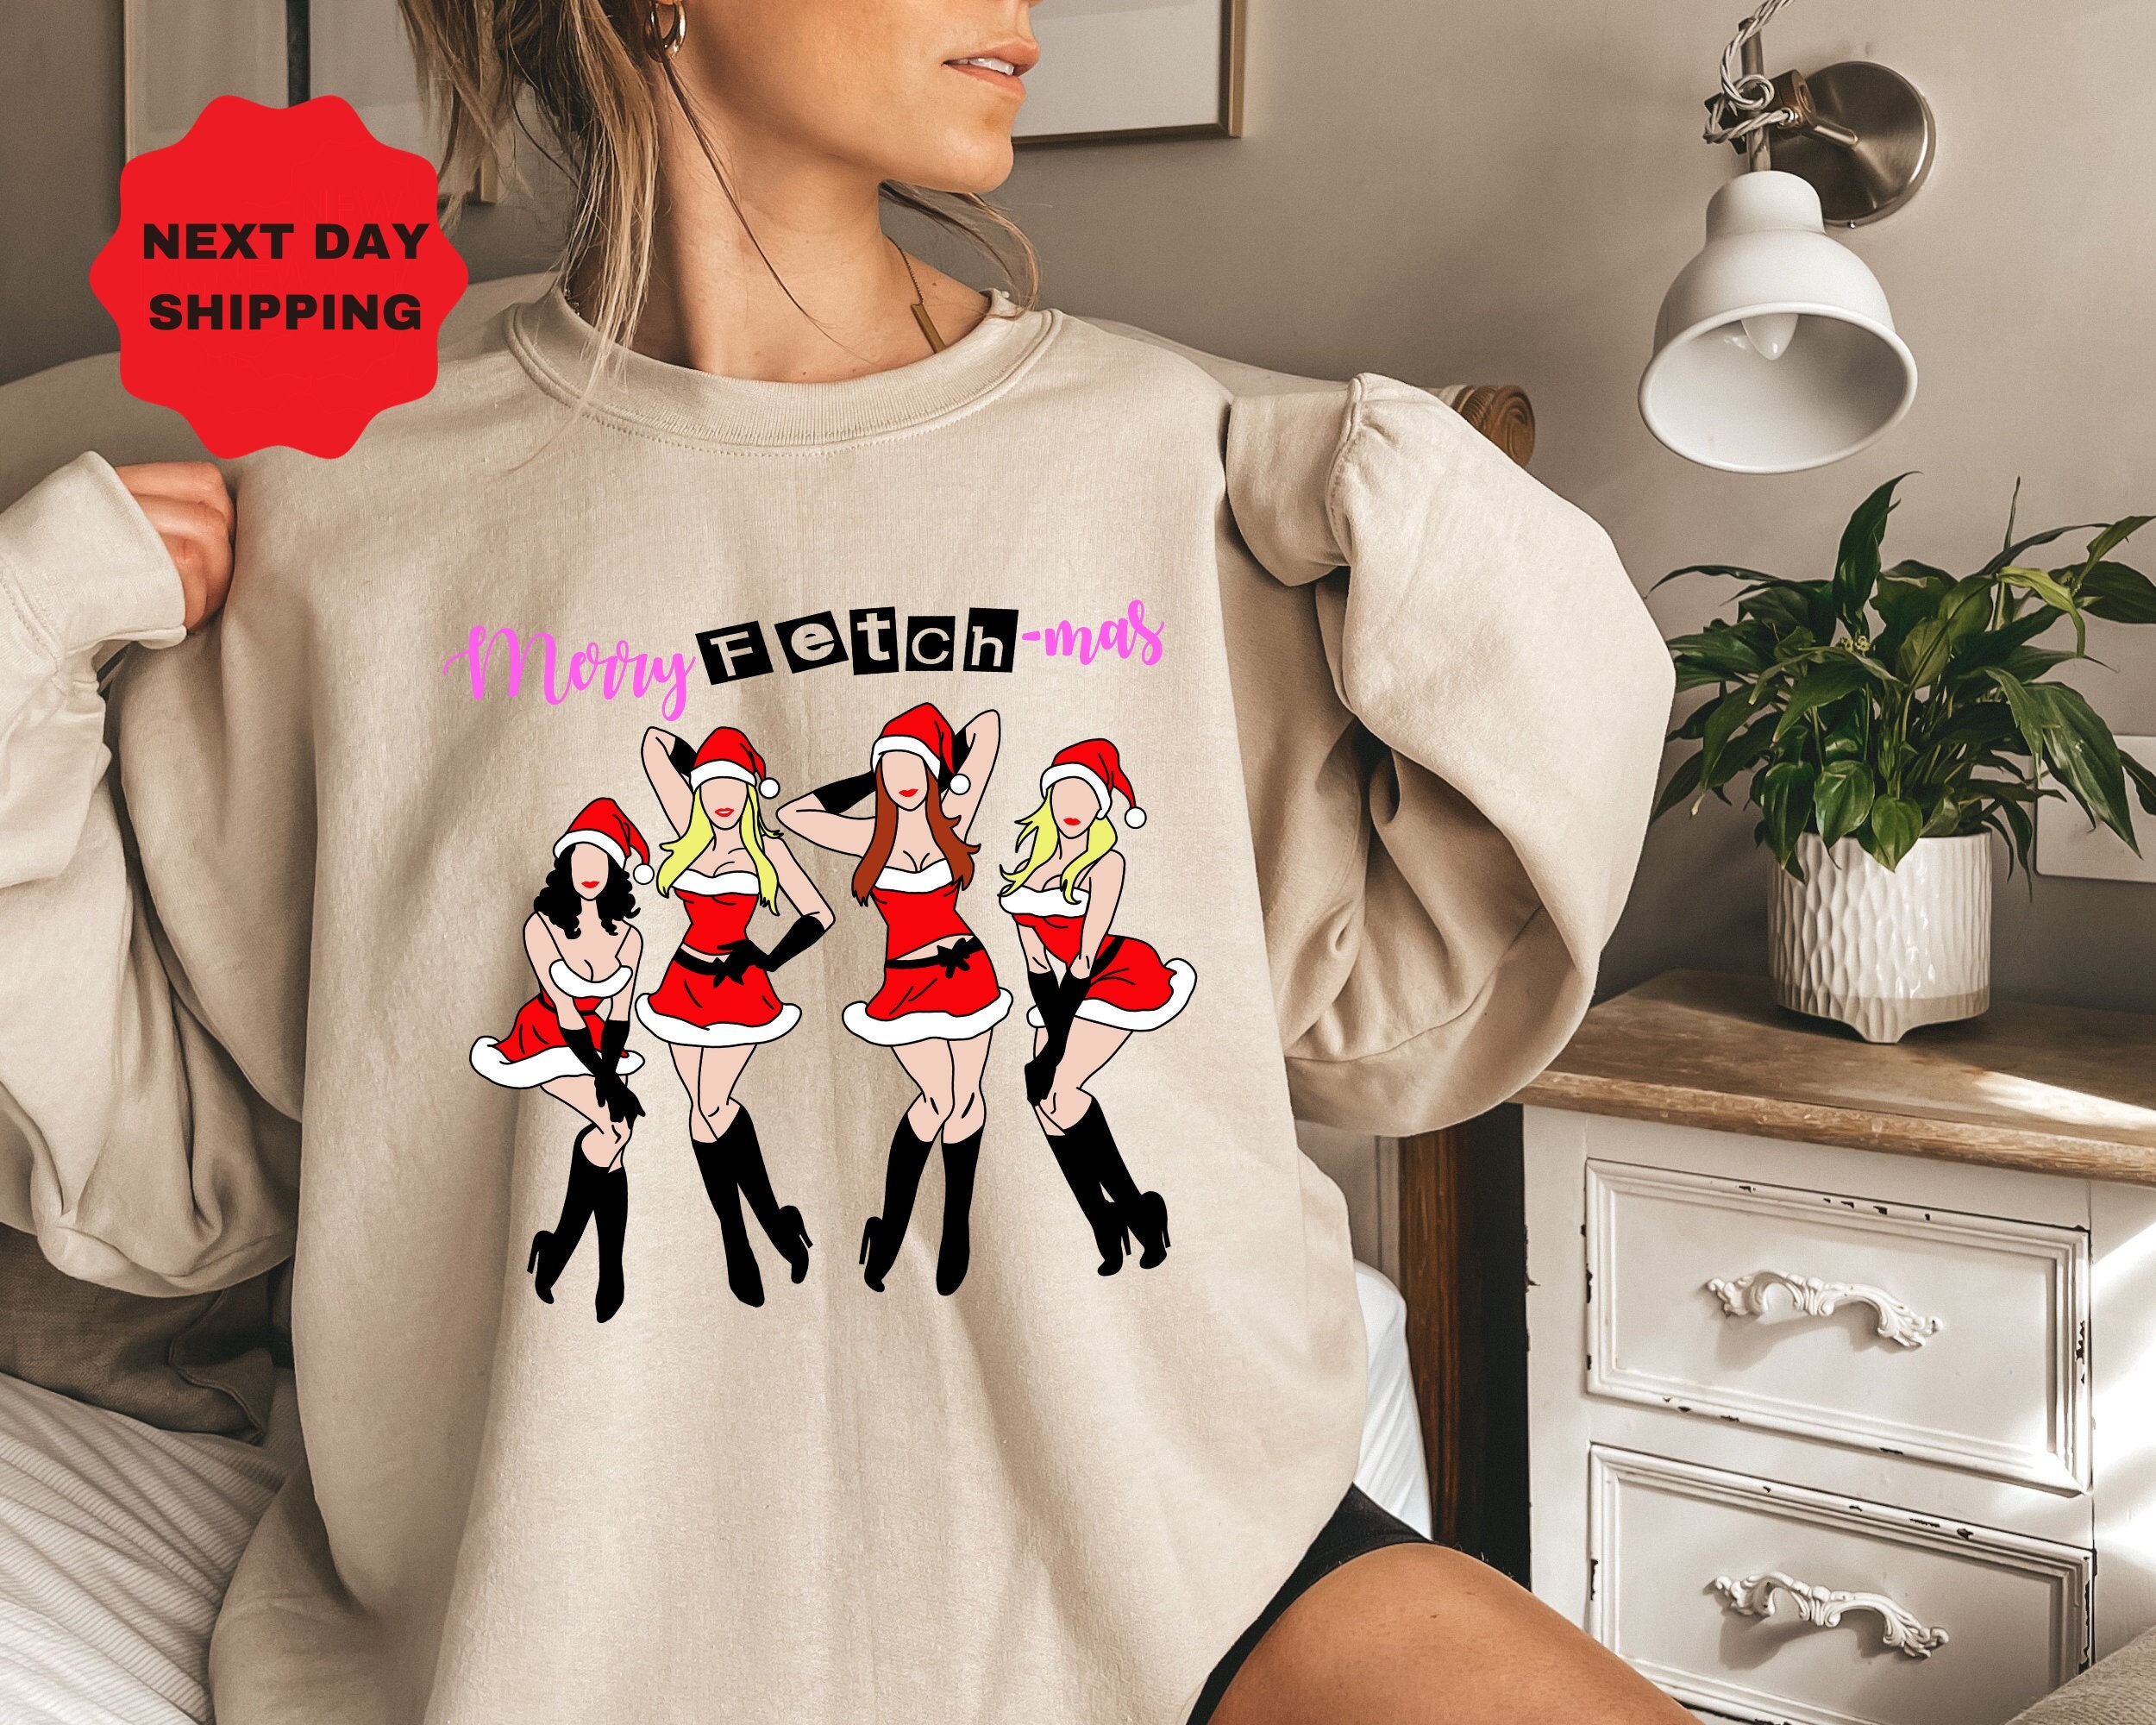 Mean Girls Jingle Bell Rock Sweater, Fetchmas Sweater for Christmas, Funny  Christmas Sweater, Y2k Humor Shirt, Thats so Fetch Crewneck 